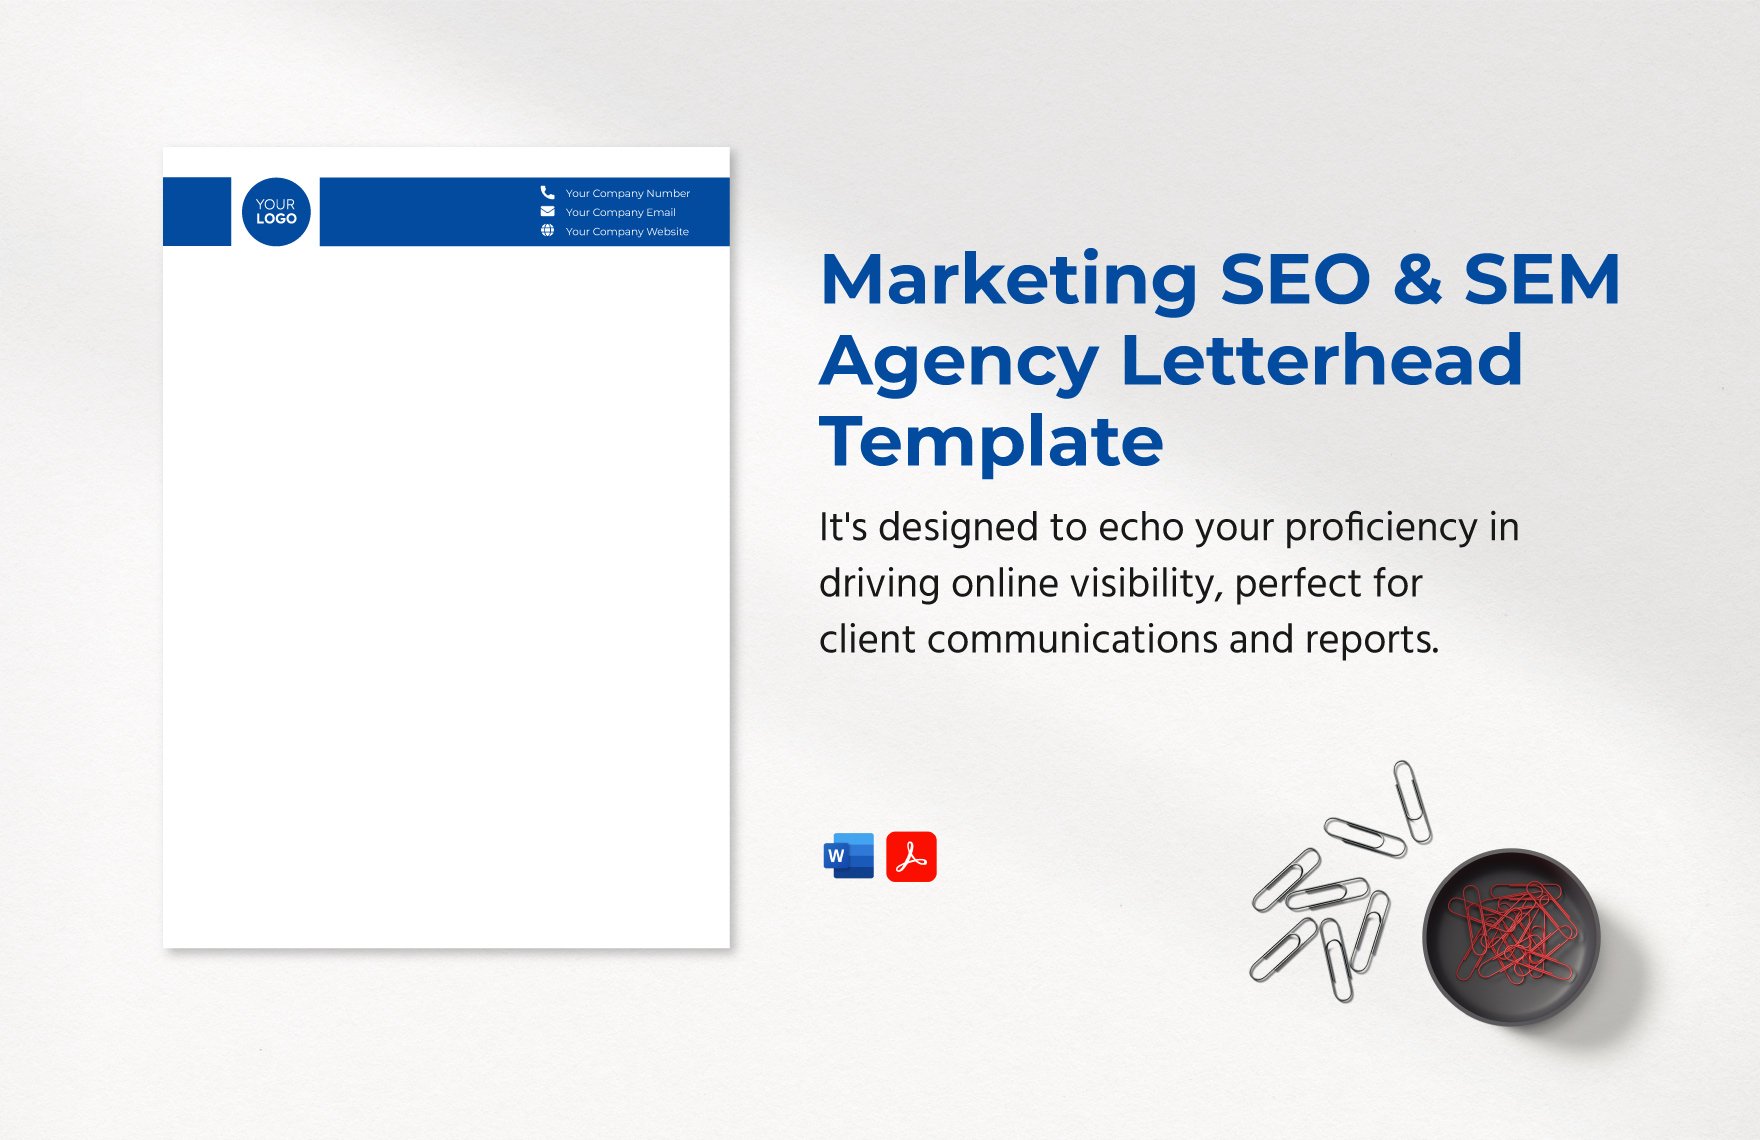 Marketing SEO & SEM Agency Letterhead Template